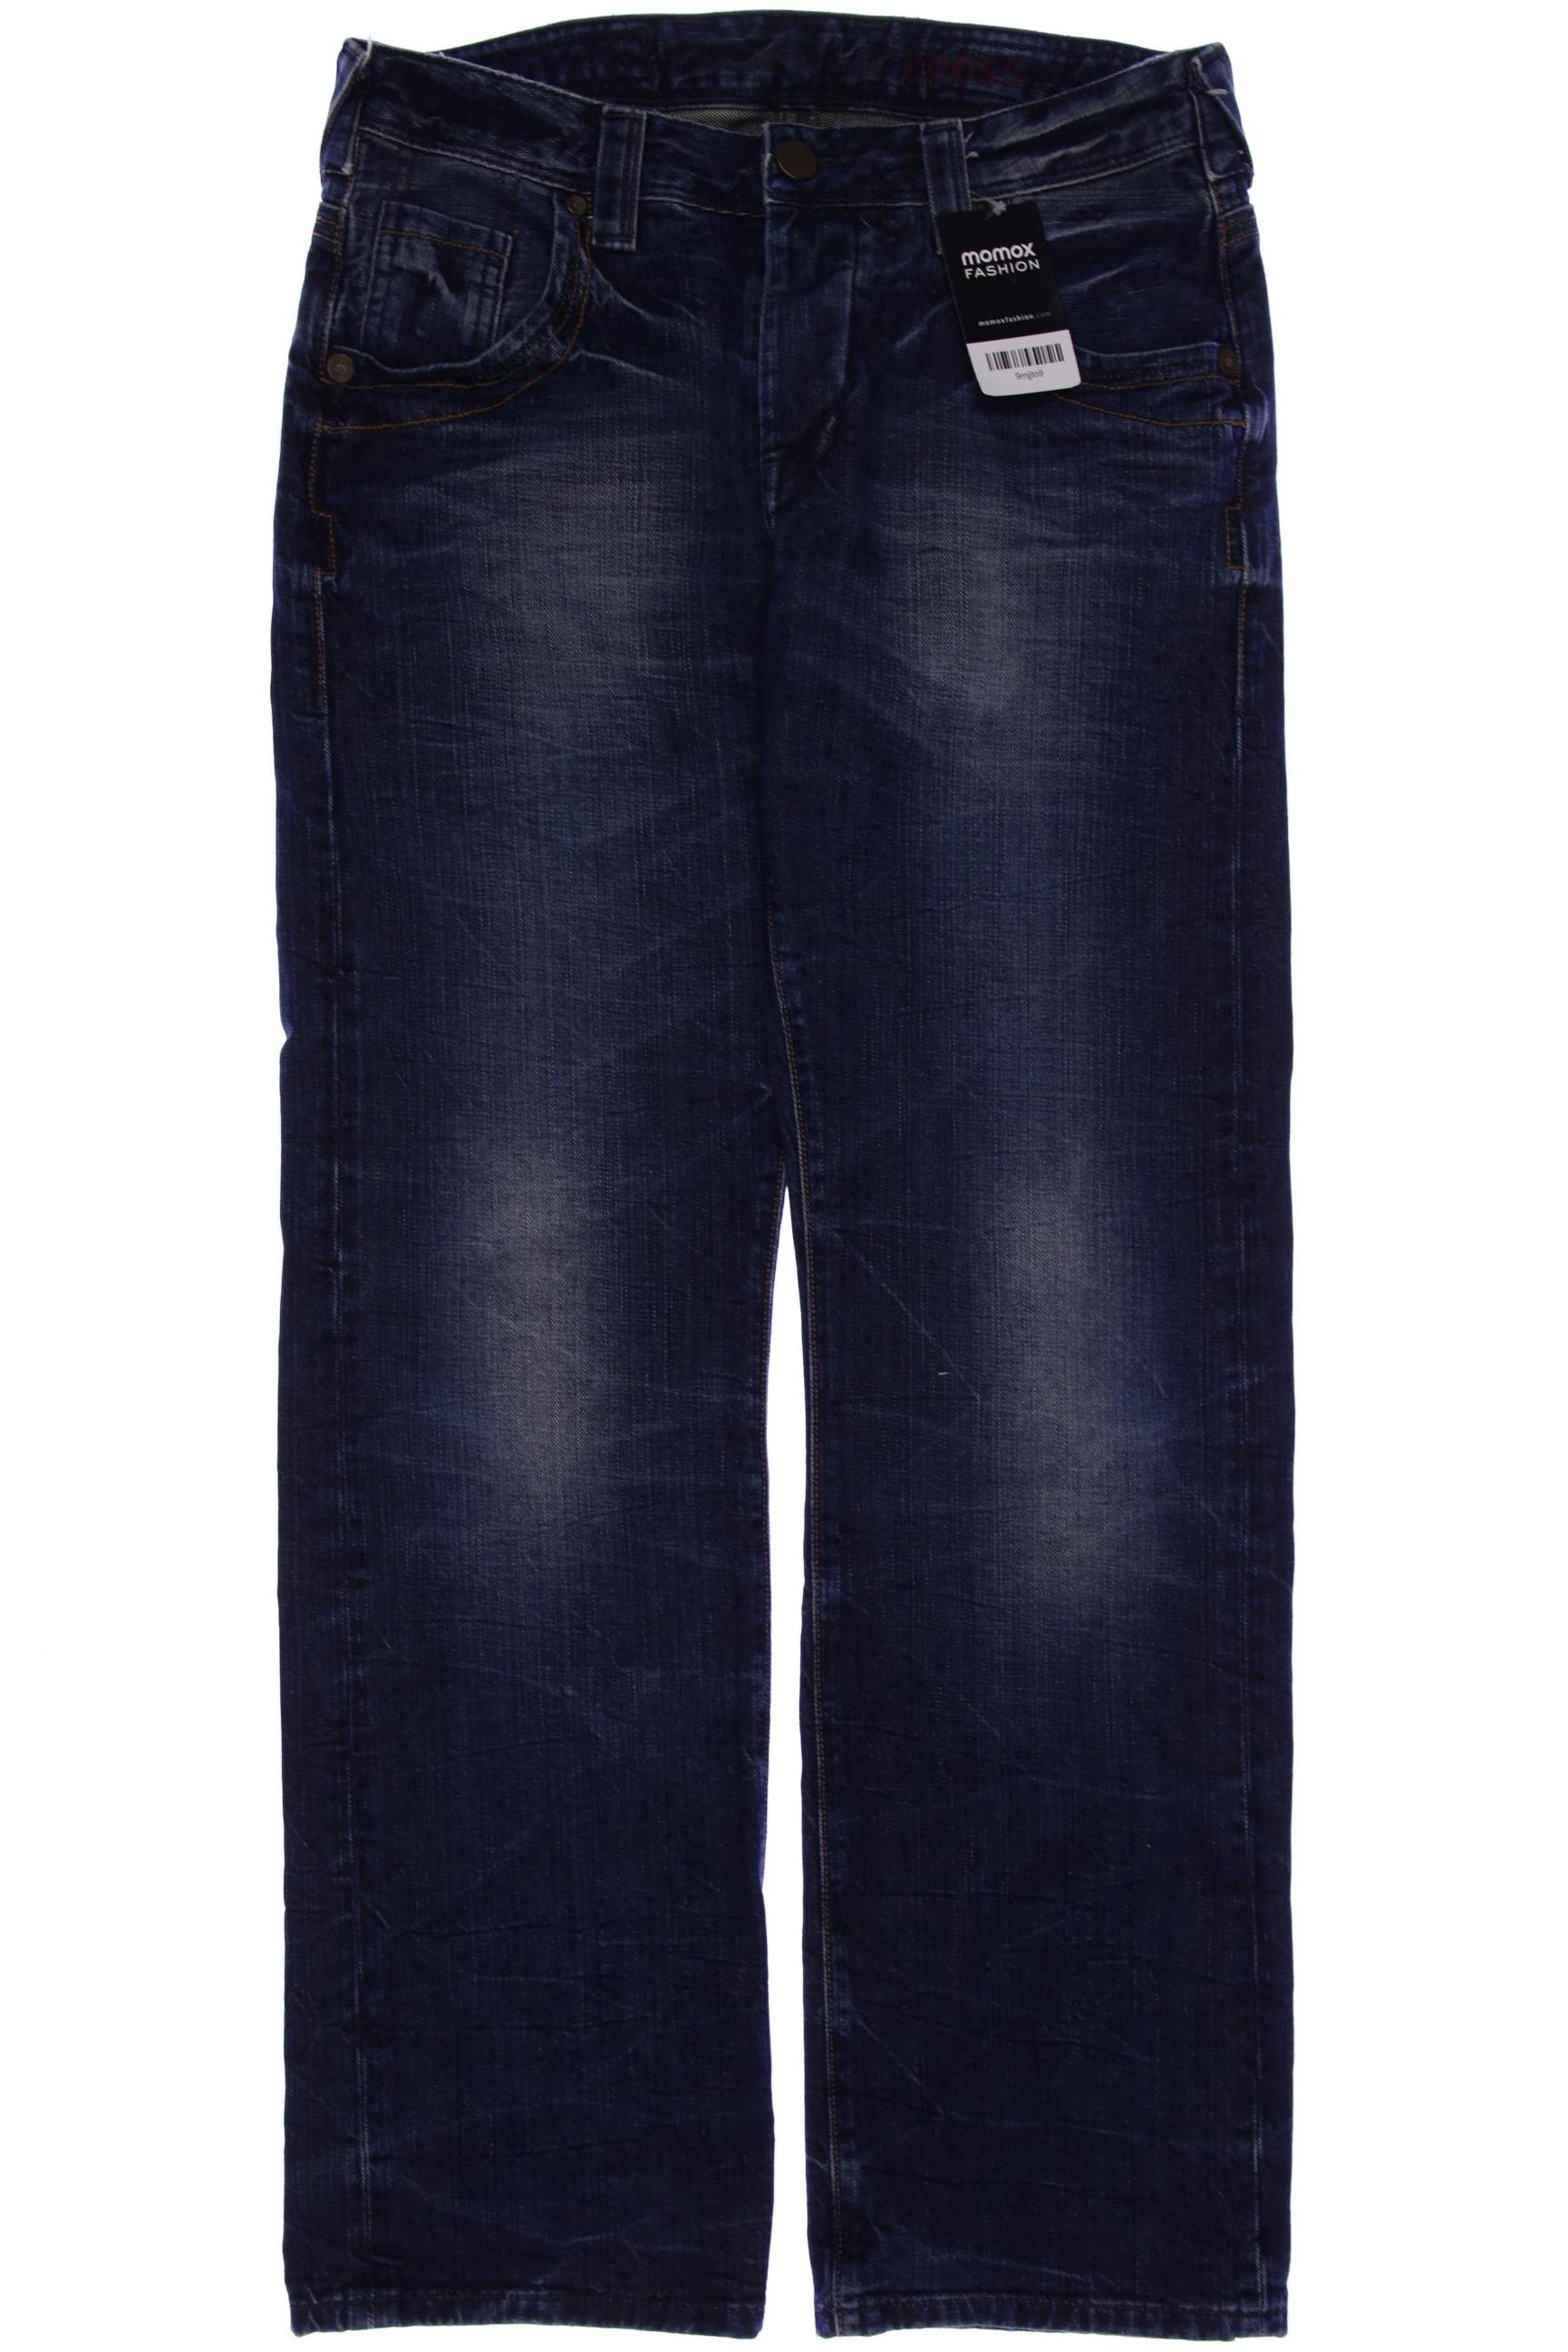 Cross Jeans Herren Jeans, marineblau von cross jeans